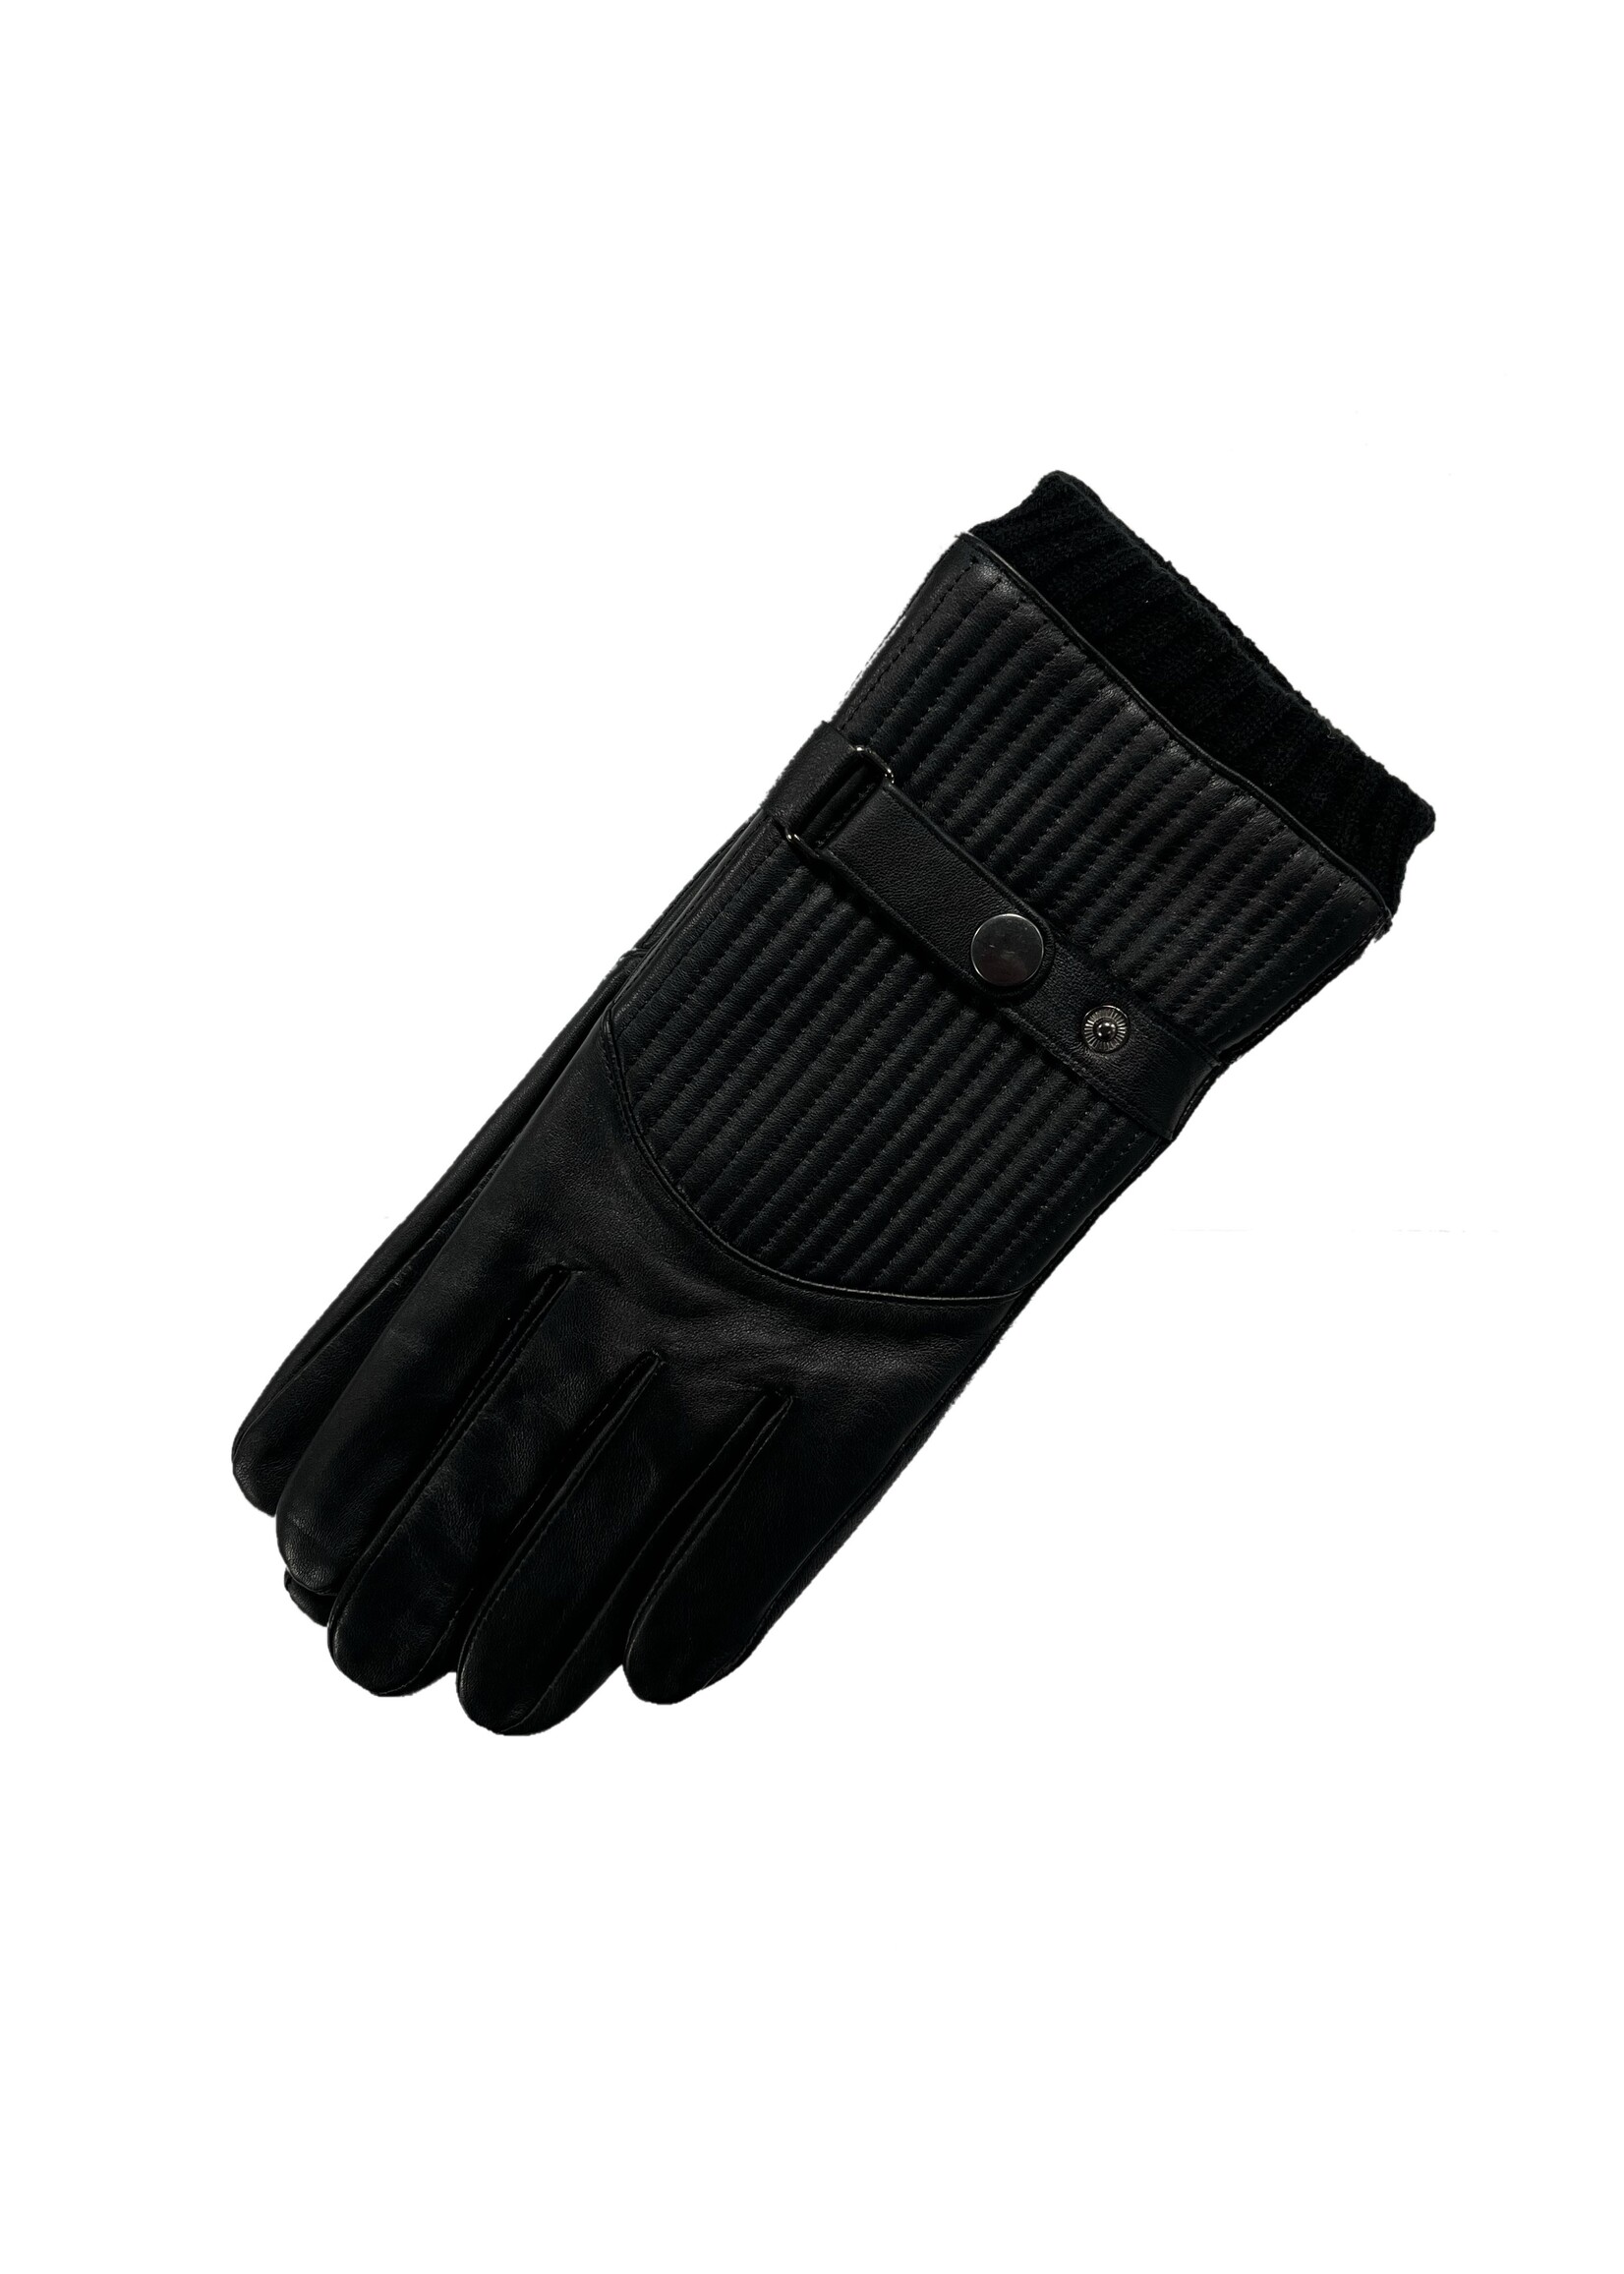 Gottmann Mens Classic Leather Glove with Stitching